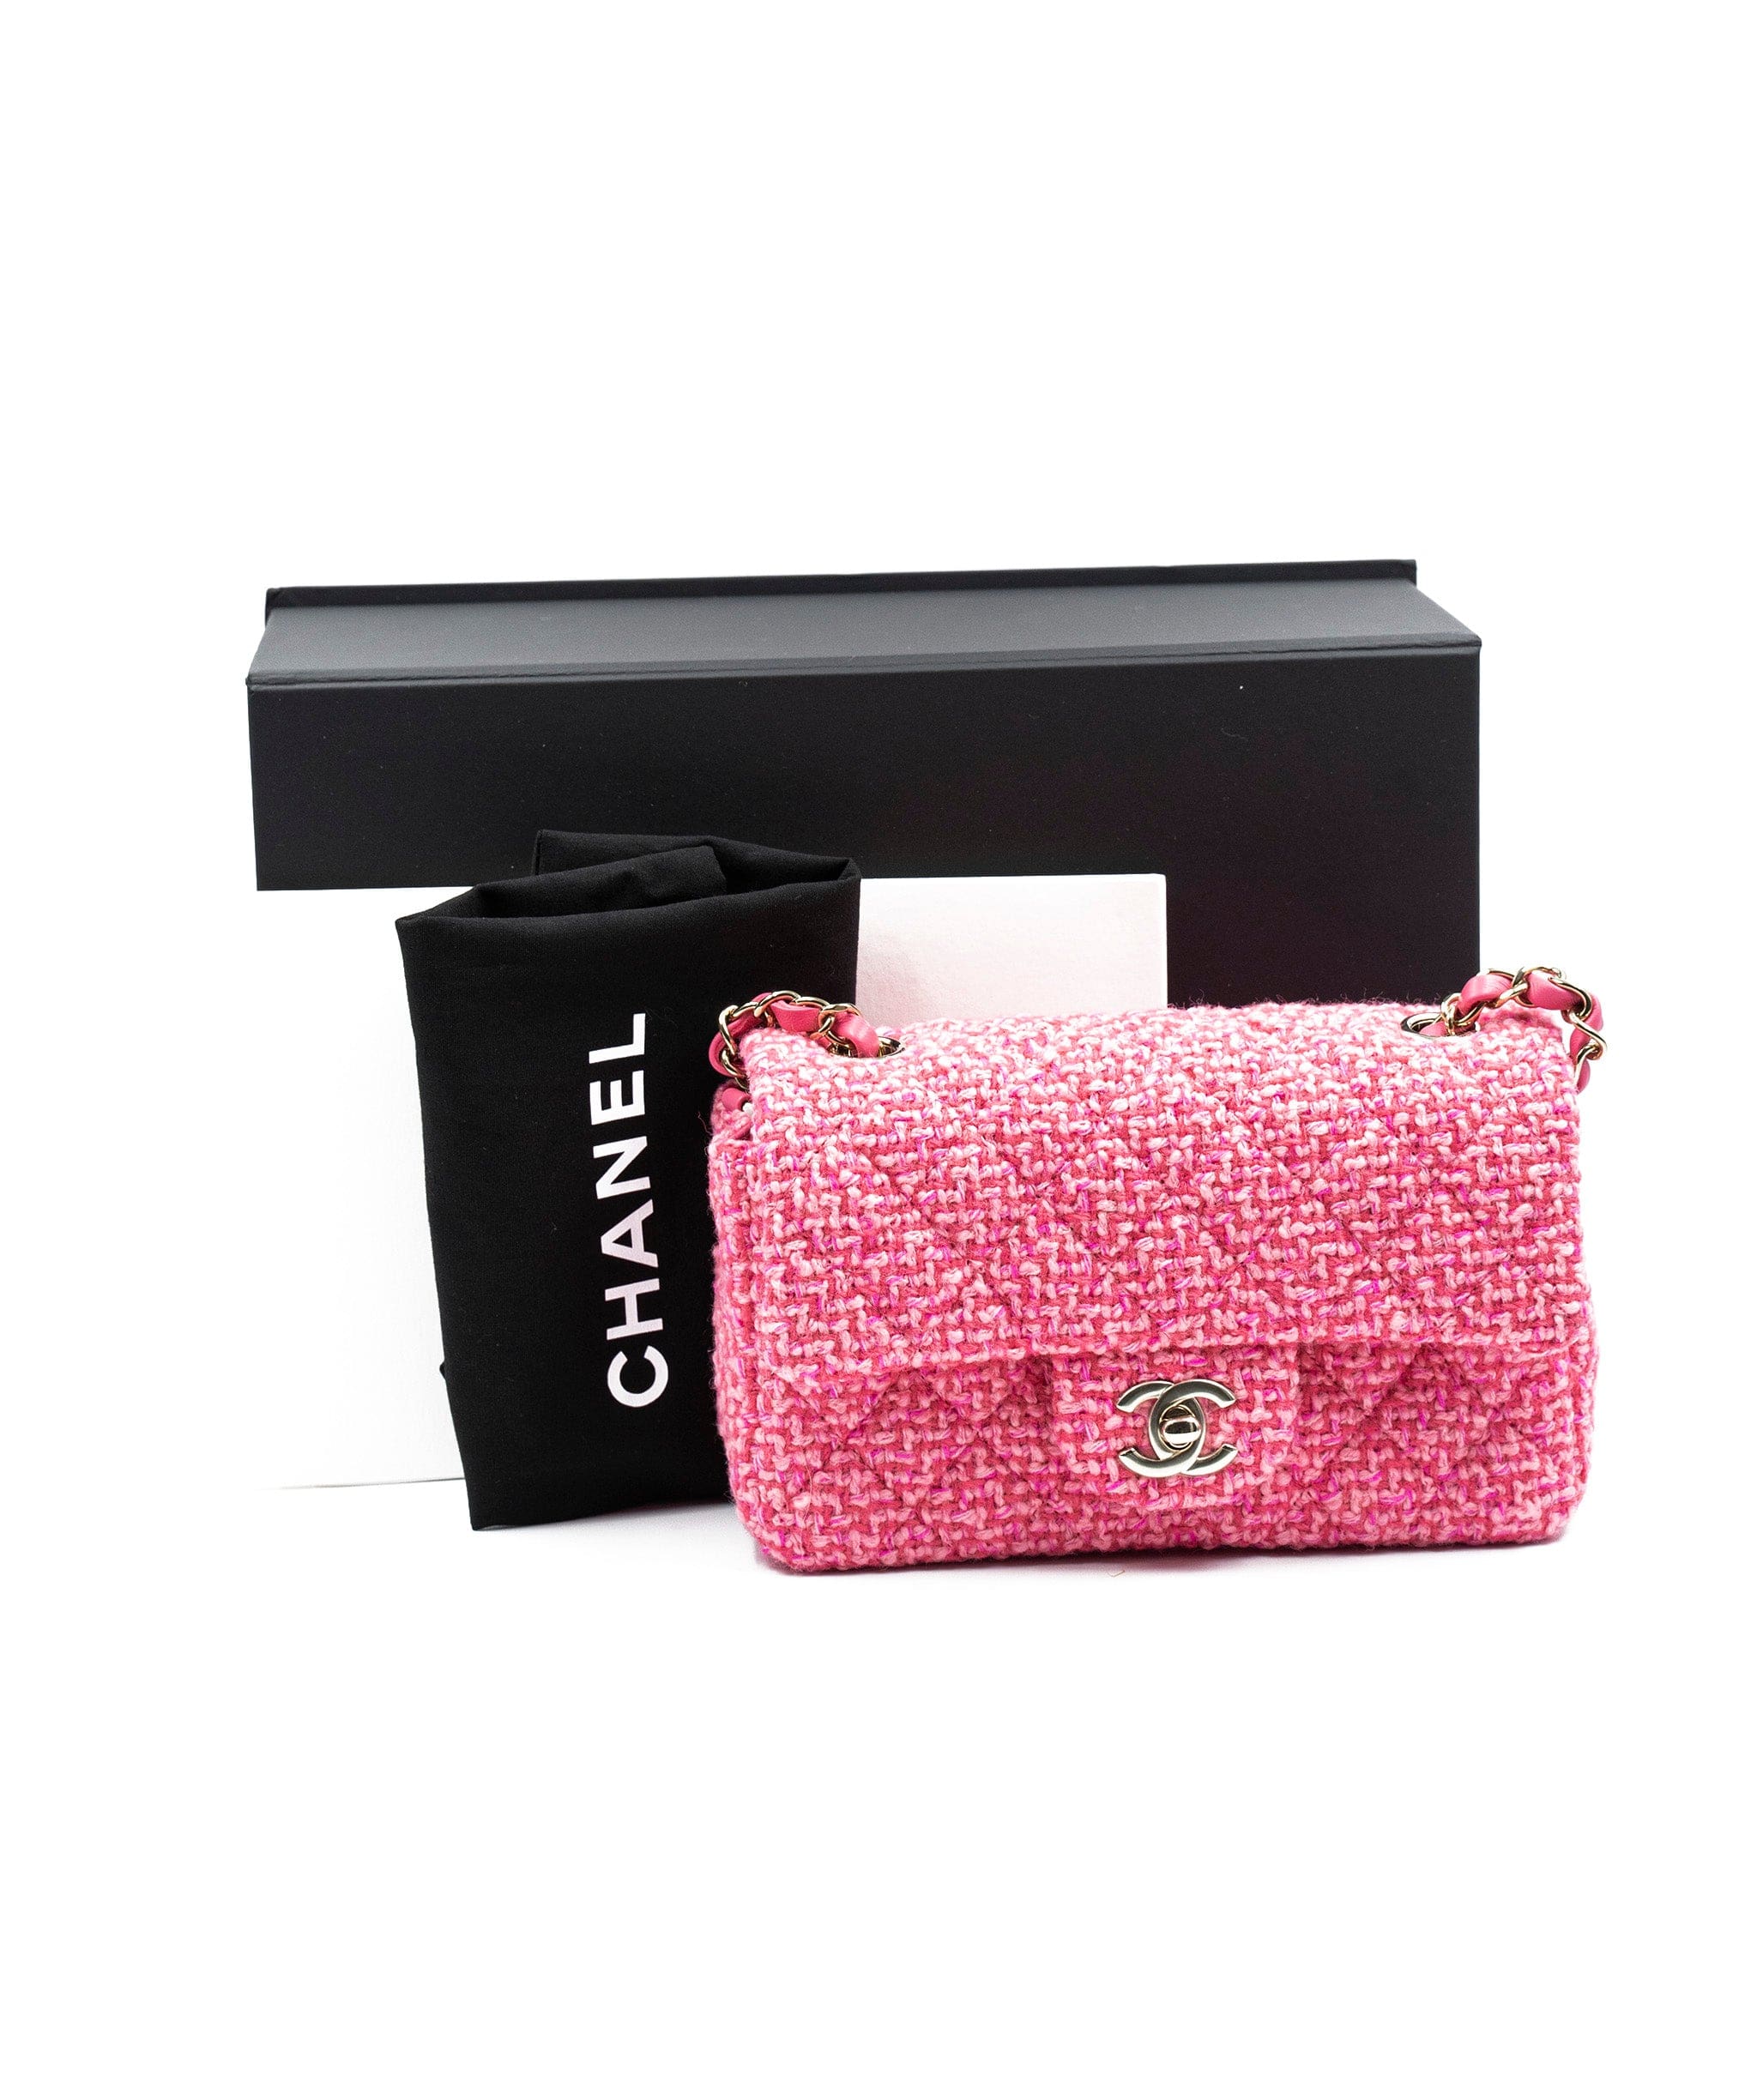 Chanel Chanel pink flap bag nk523 tweed ASL5052